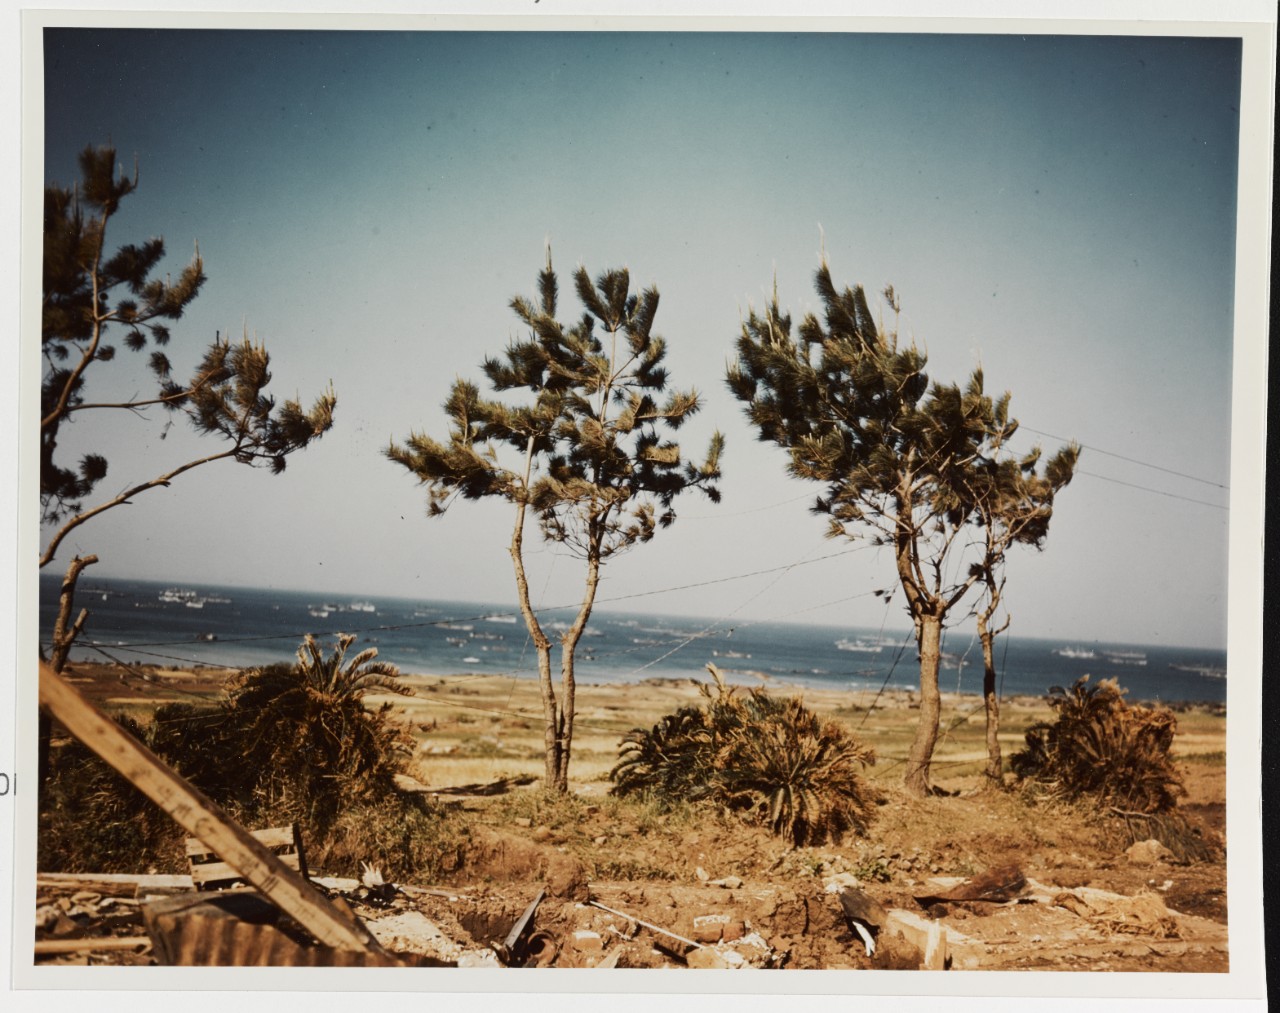 Okinawa Invasion March -April 1945